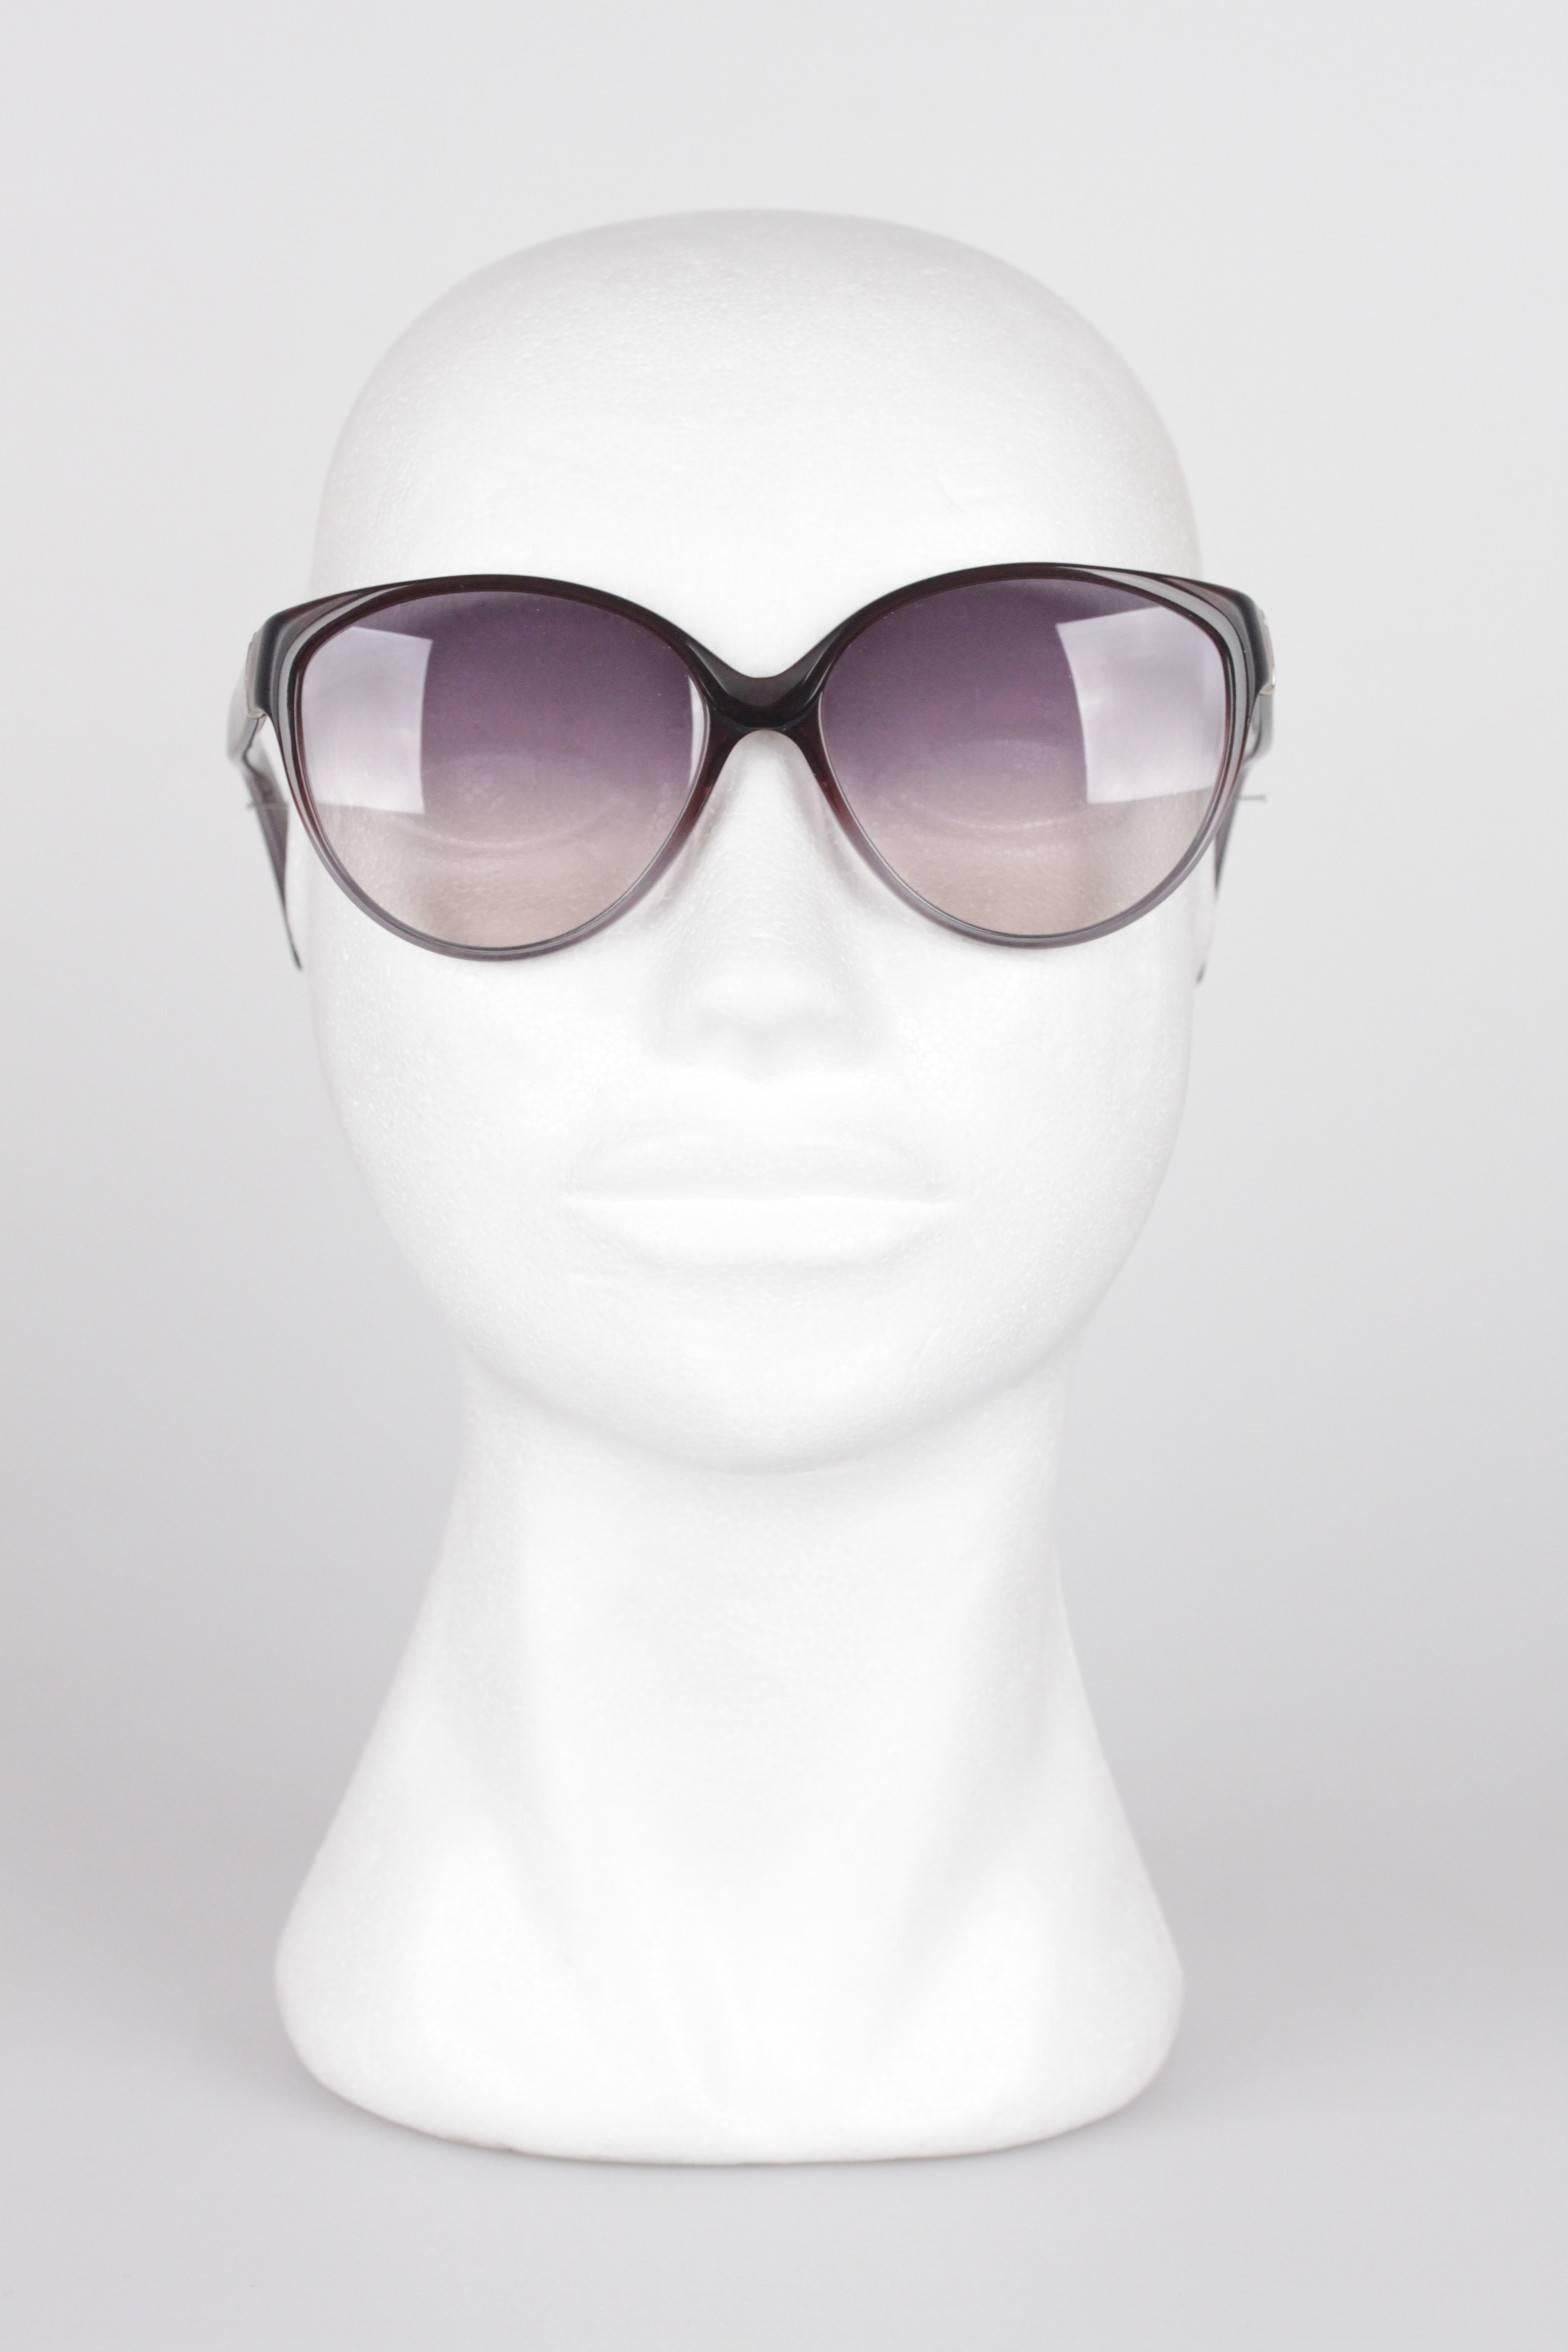 YVES SAINT LAURENT Sunglasses YSL 6336/S 60mm 130 NEW, MINT & BOXED 3